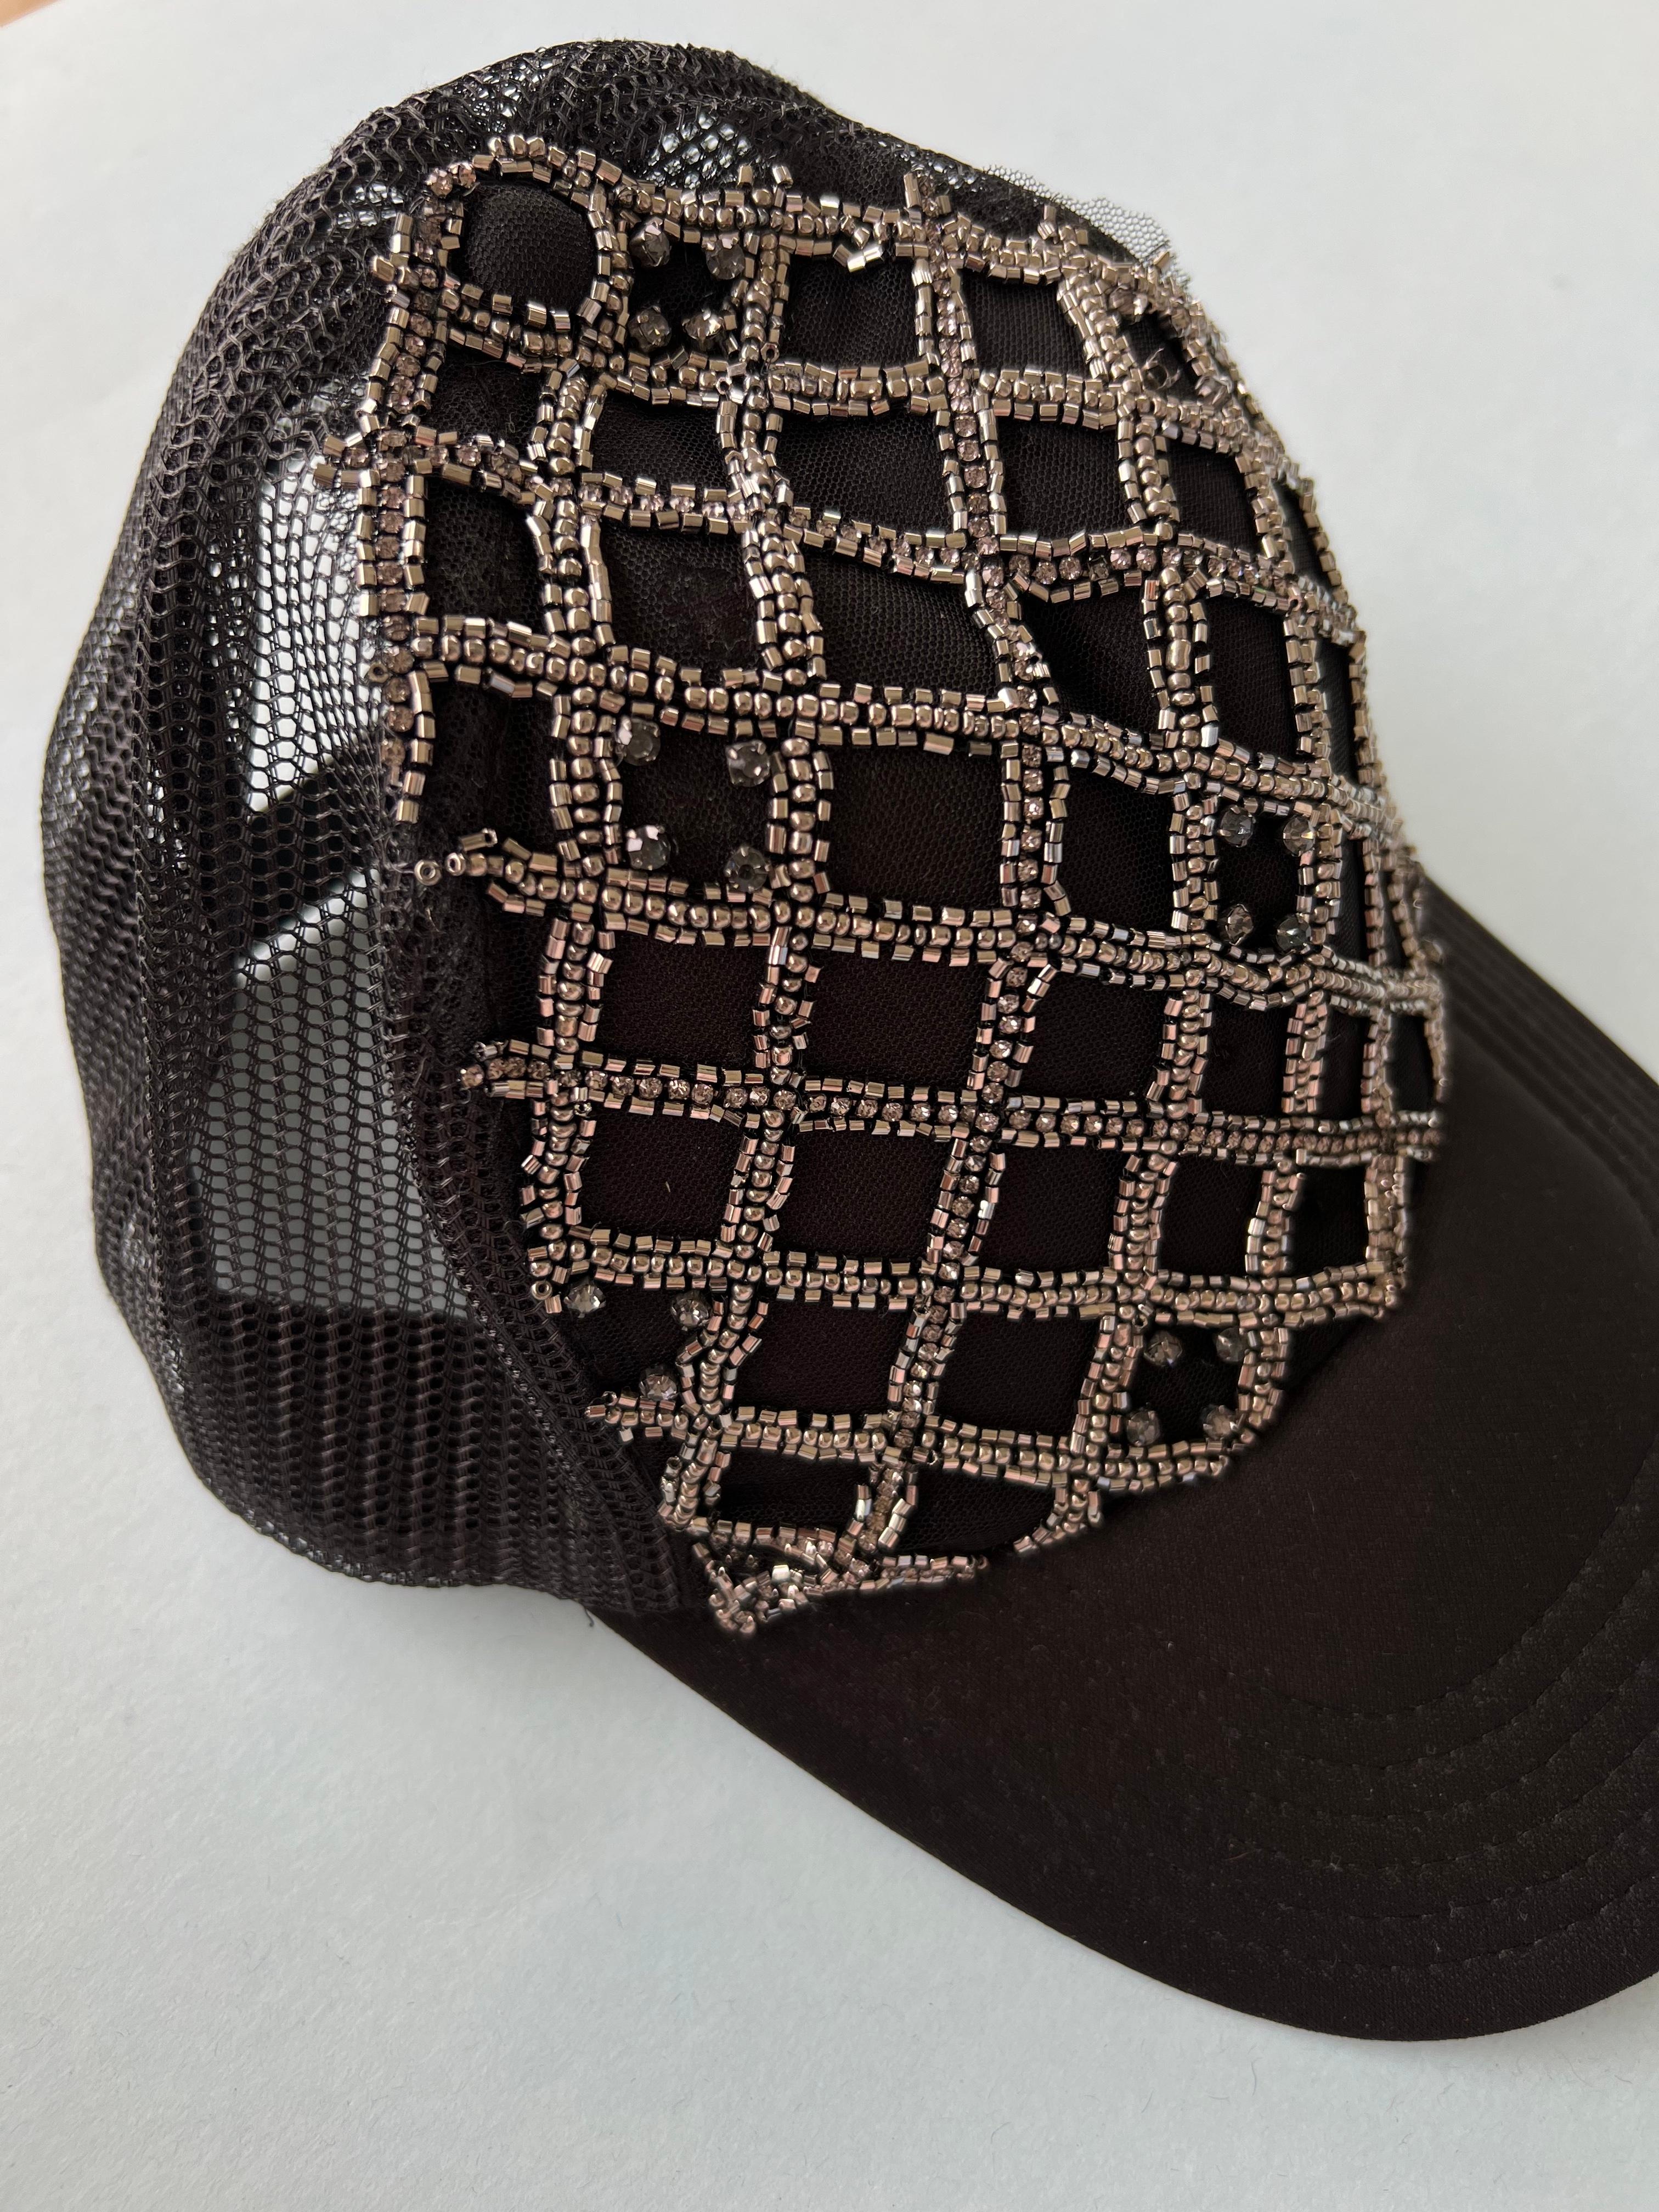 Crystal Embellishment Hat Black Trucker J Dauphin 5